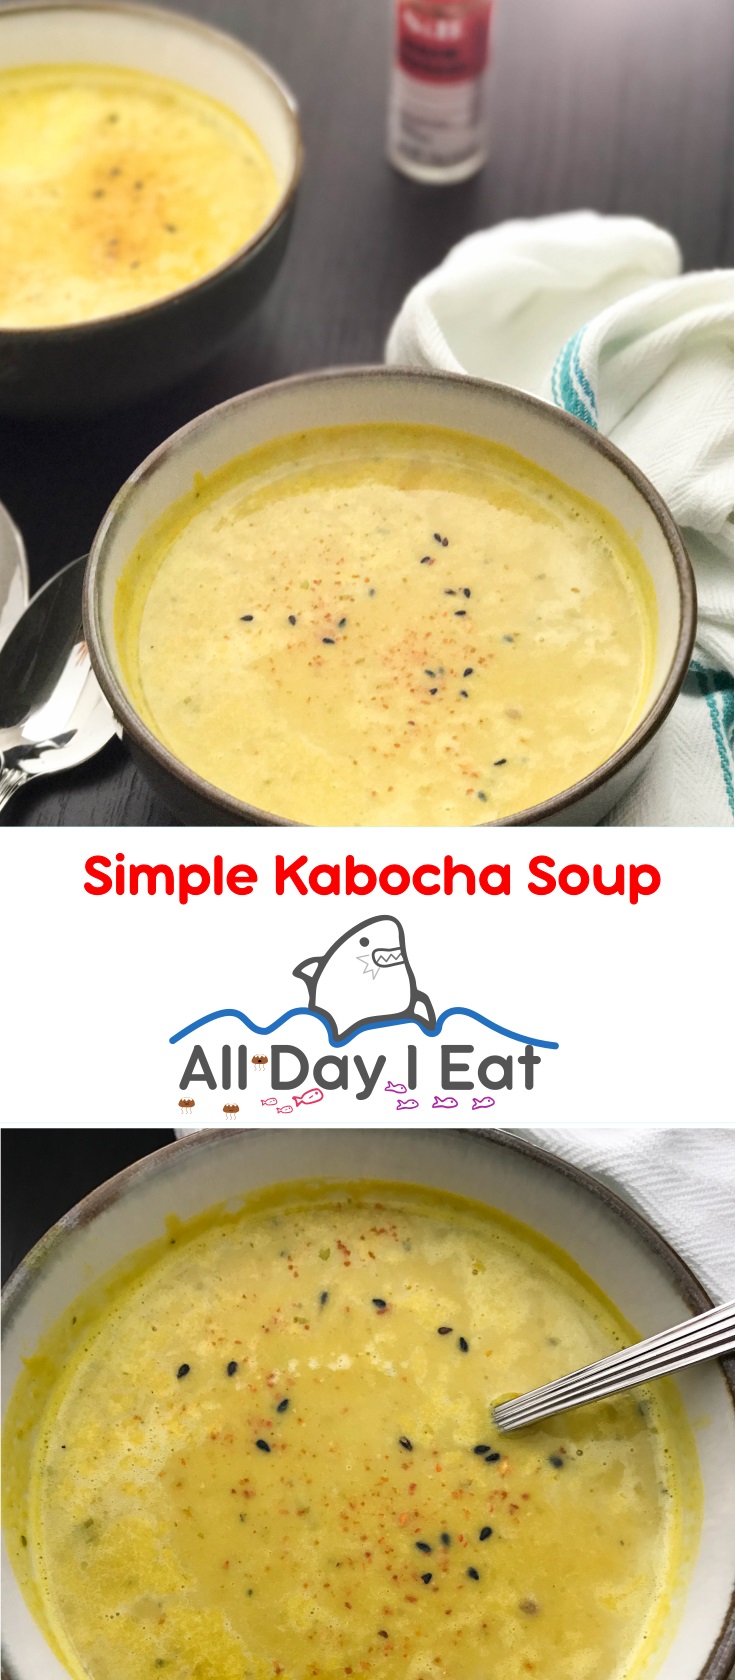 Simple Kabocha (Japanese pumpkin) Soup | www.alldayieat.com